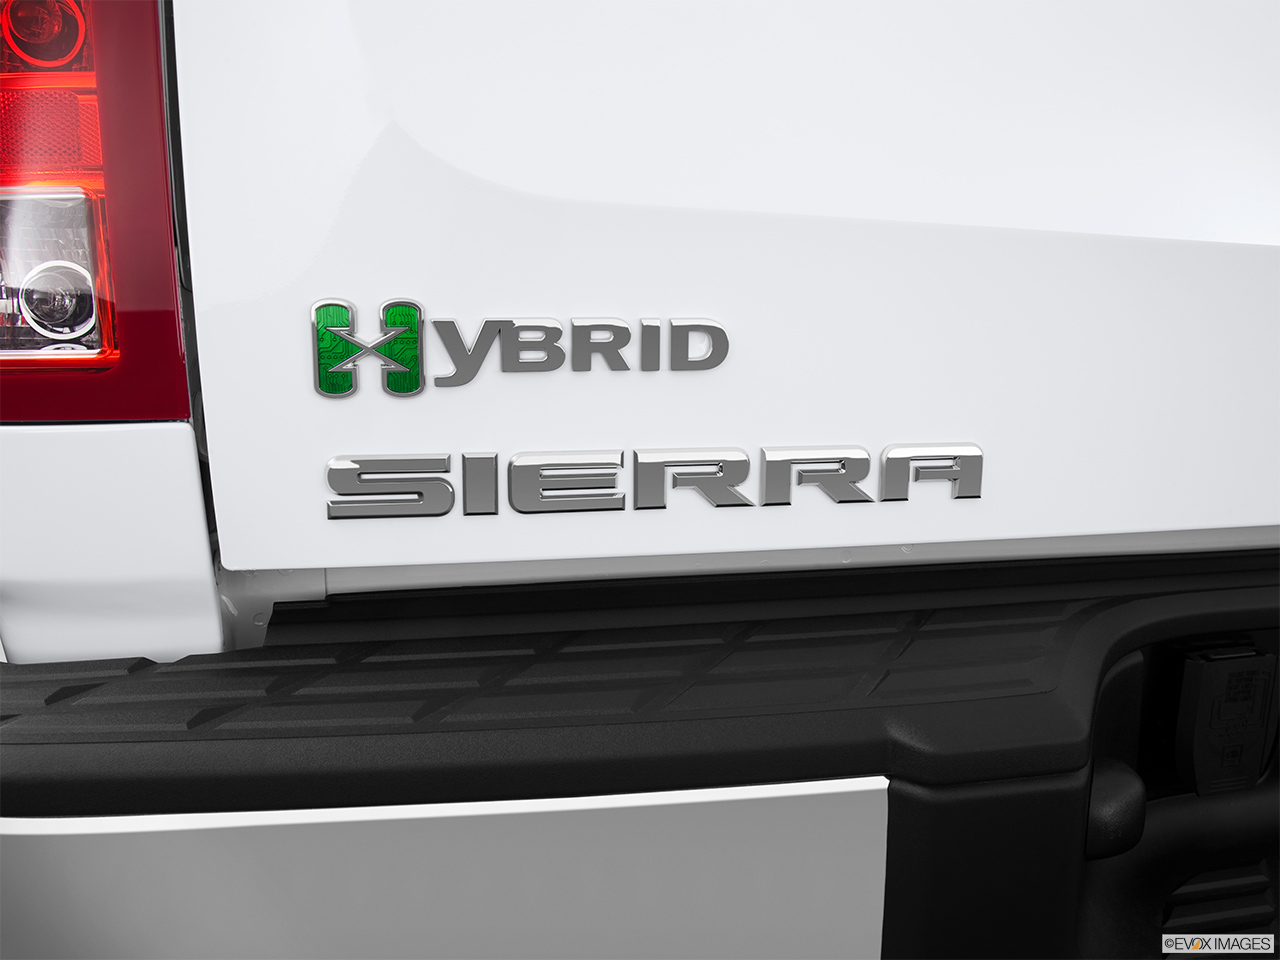 2013 GMC Sierra 1500 Hybrid 3HA Rear model badge/emblem 